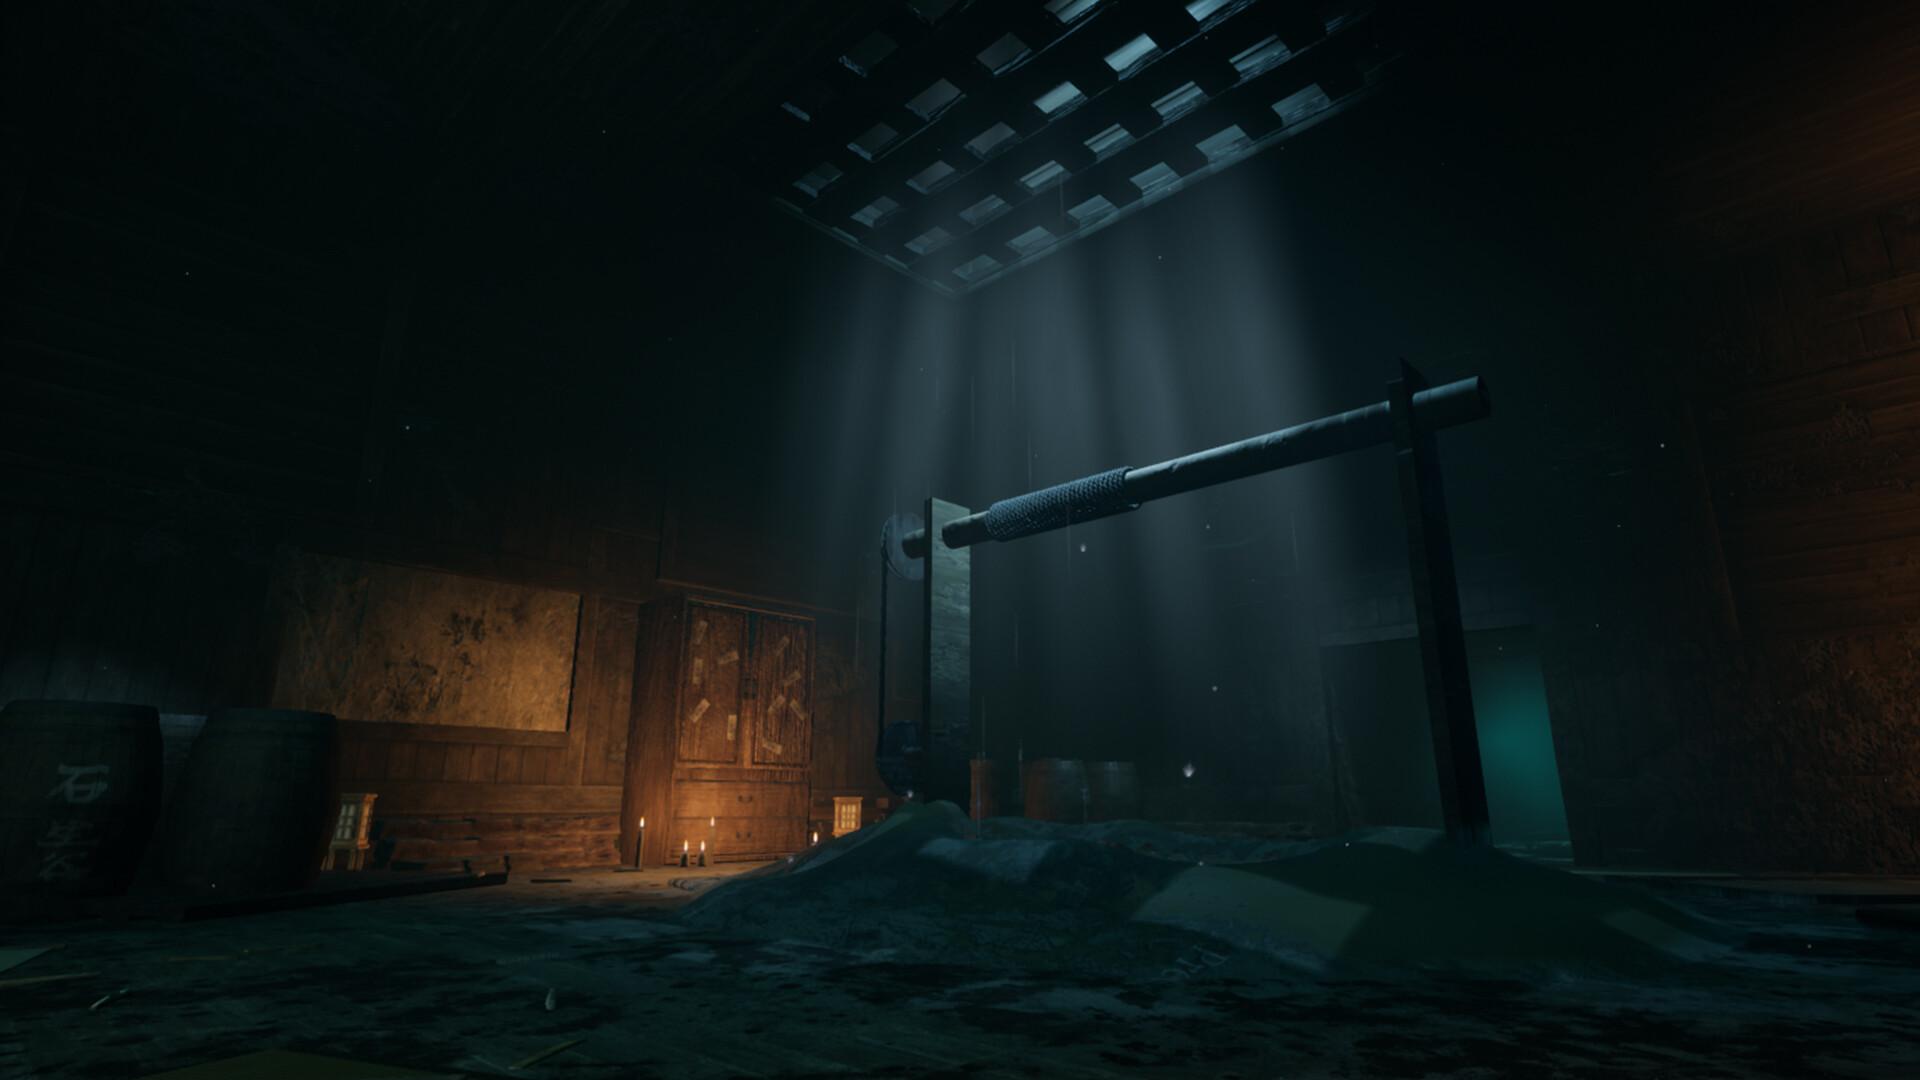 Screenshot №32 from game Malice